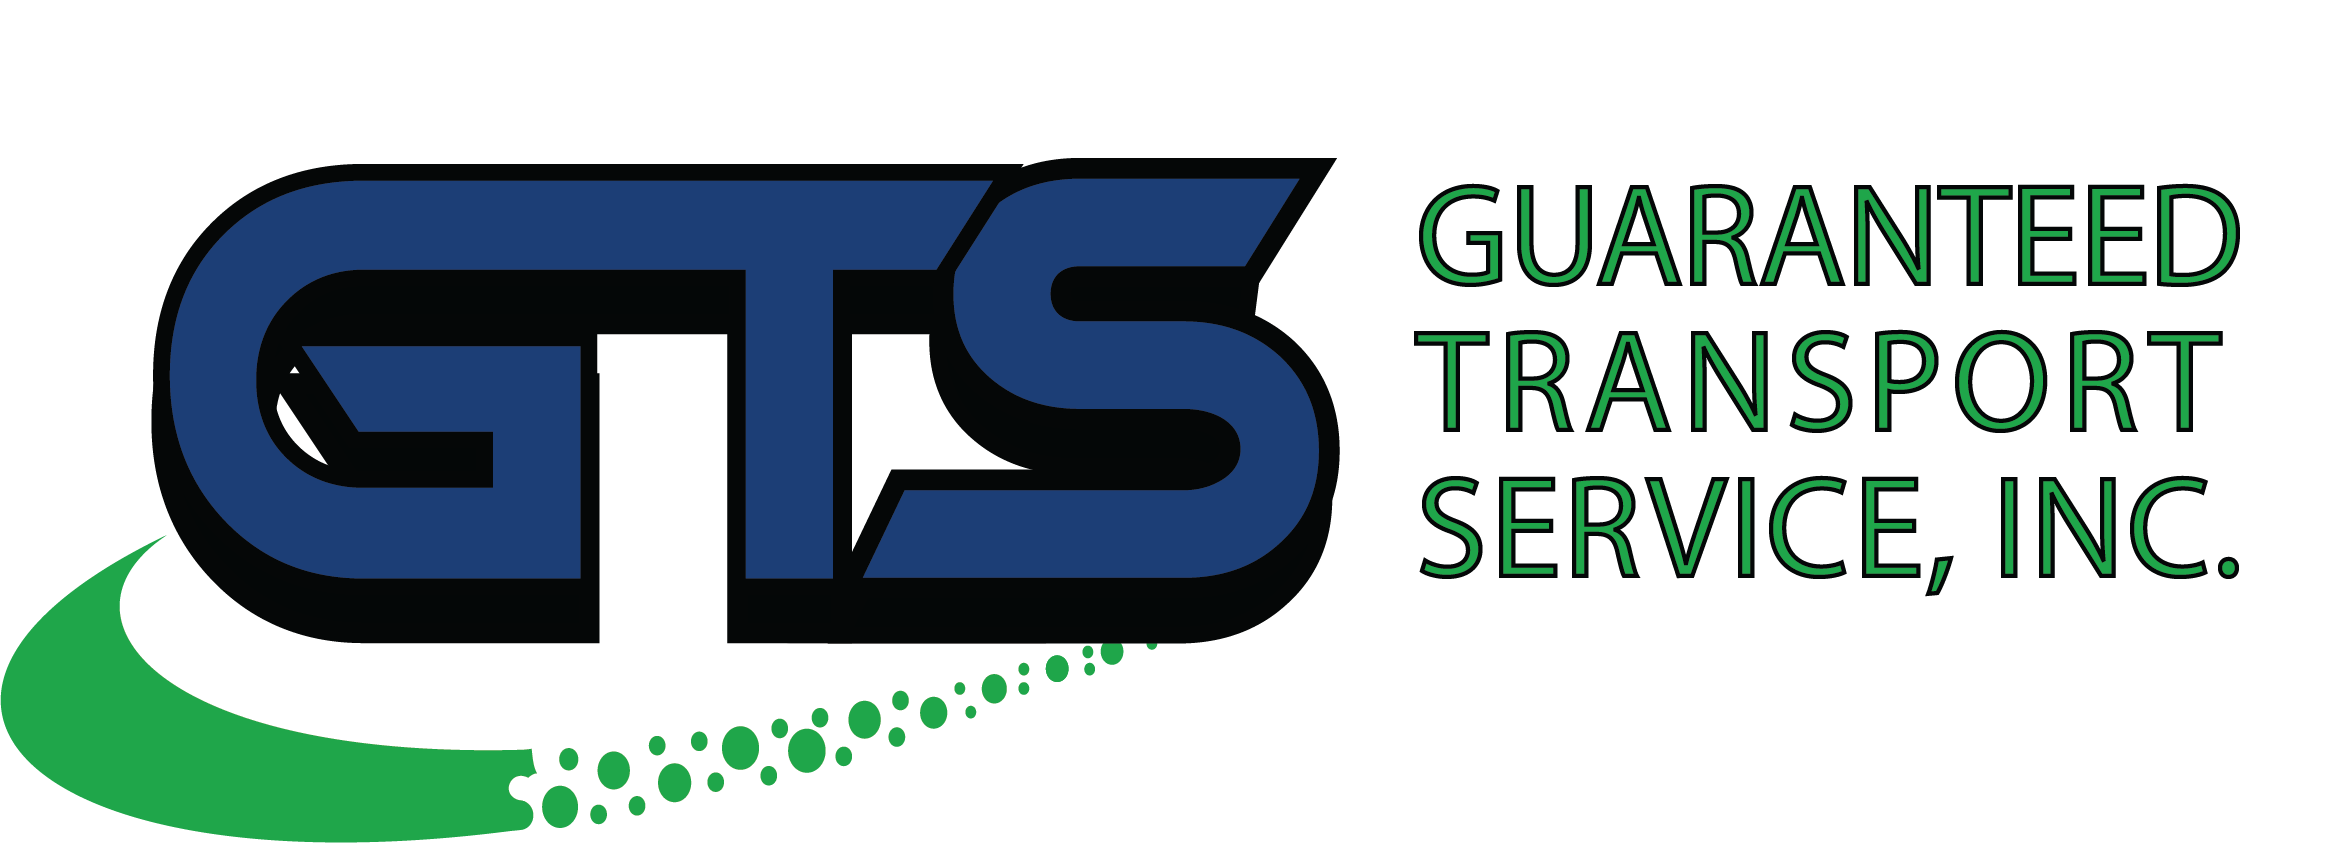 Guaranteed Transport Service, Inc.